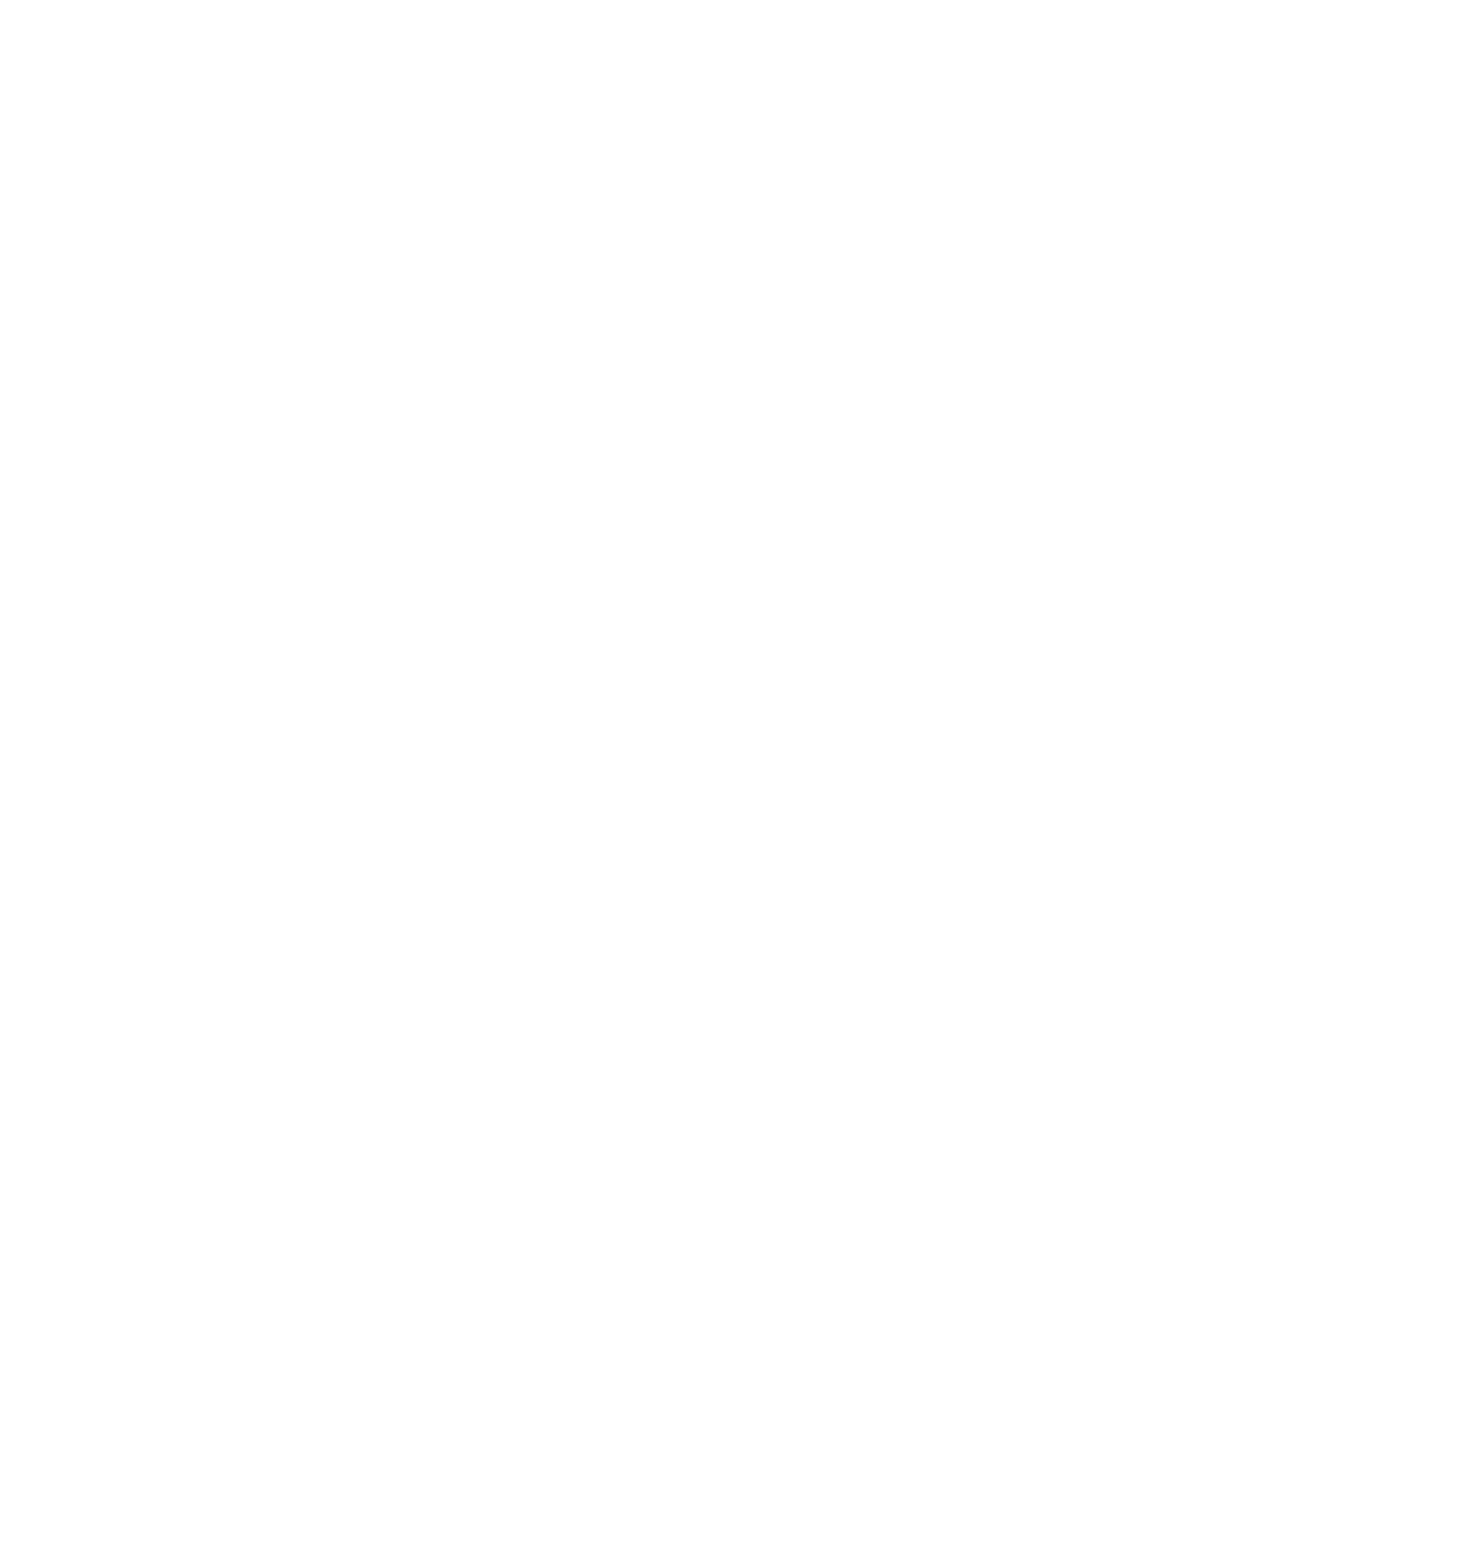 Inspira Technologies logo for dark backgrounds (transparent PNG)